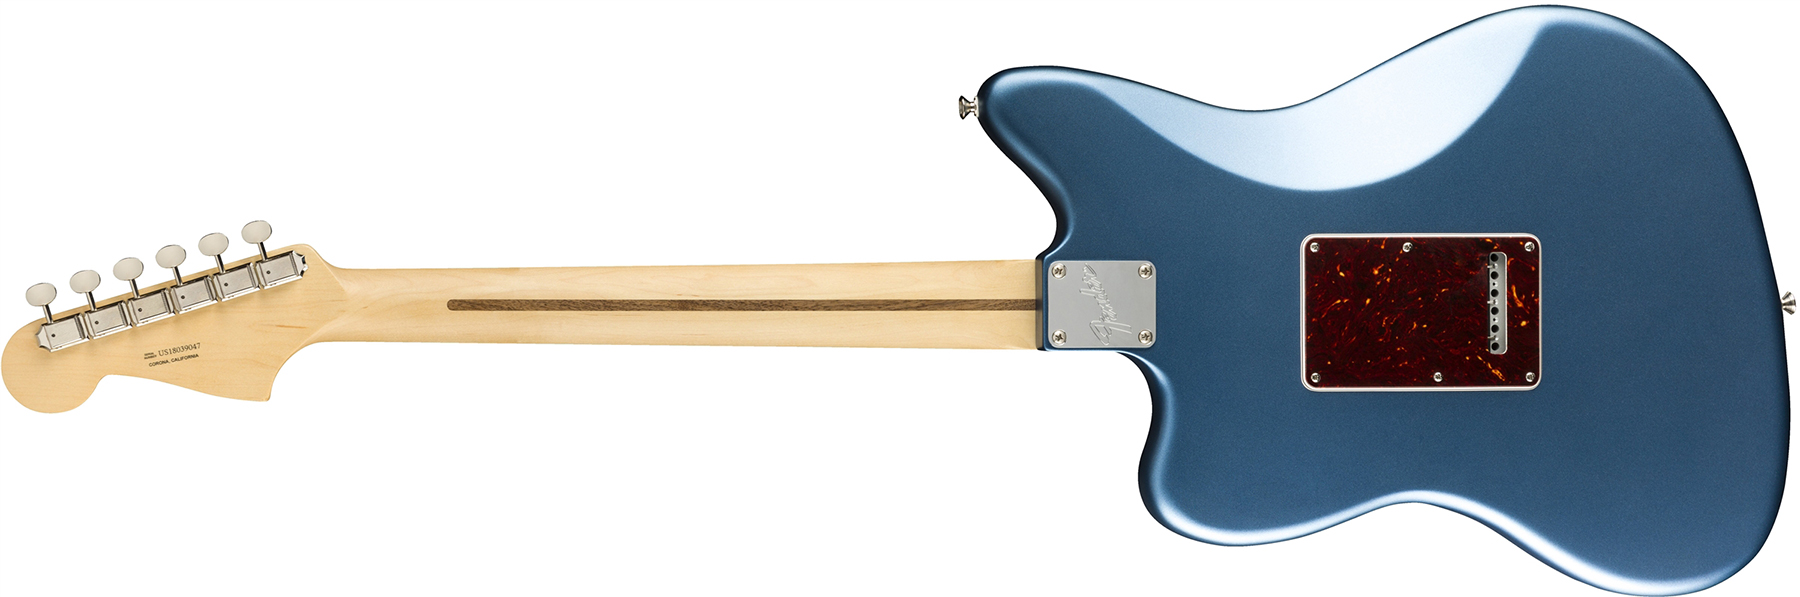 Fender Jazzmaster American Performer Usa Ss Rw - Satin Lake Placid Blue - Double cut electric guitar - Variation 1